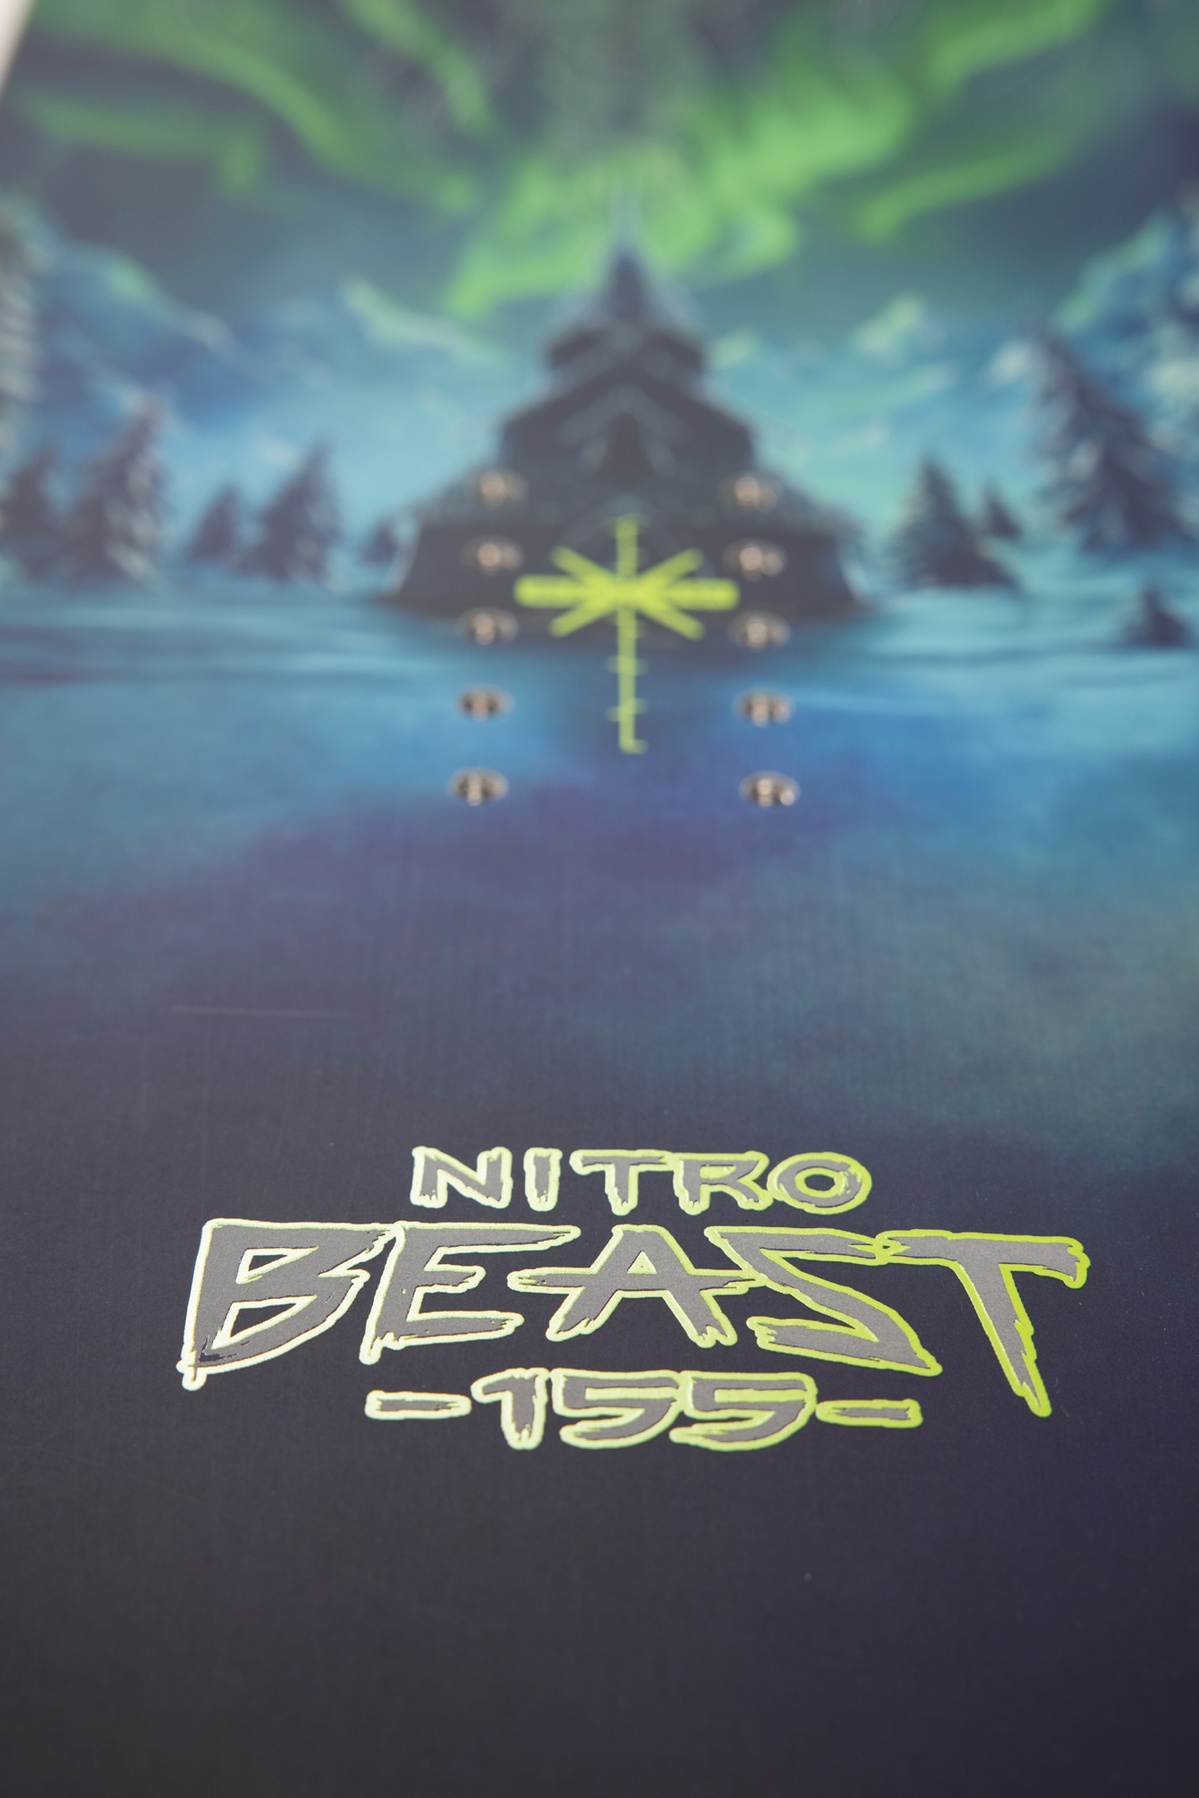 Beast | Nitro Snowboards